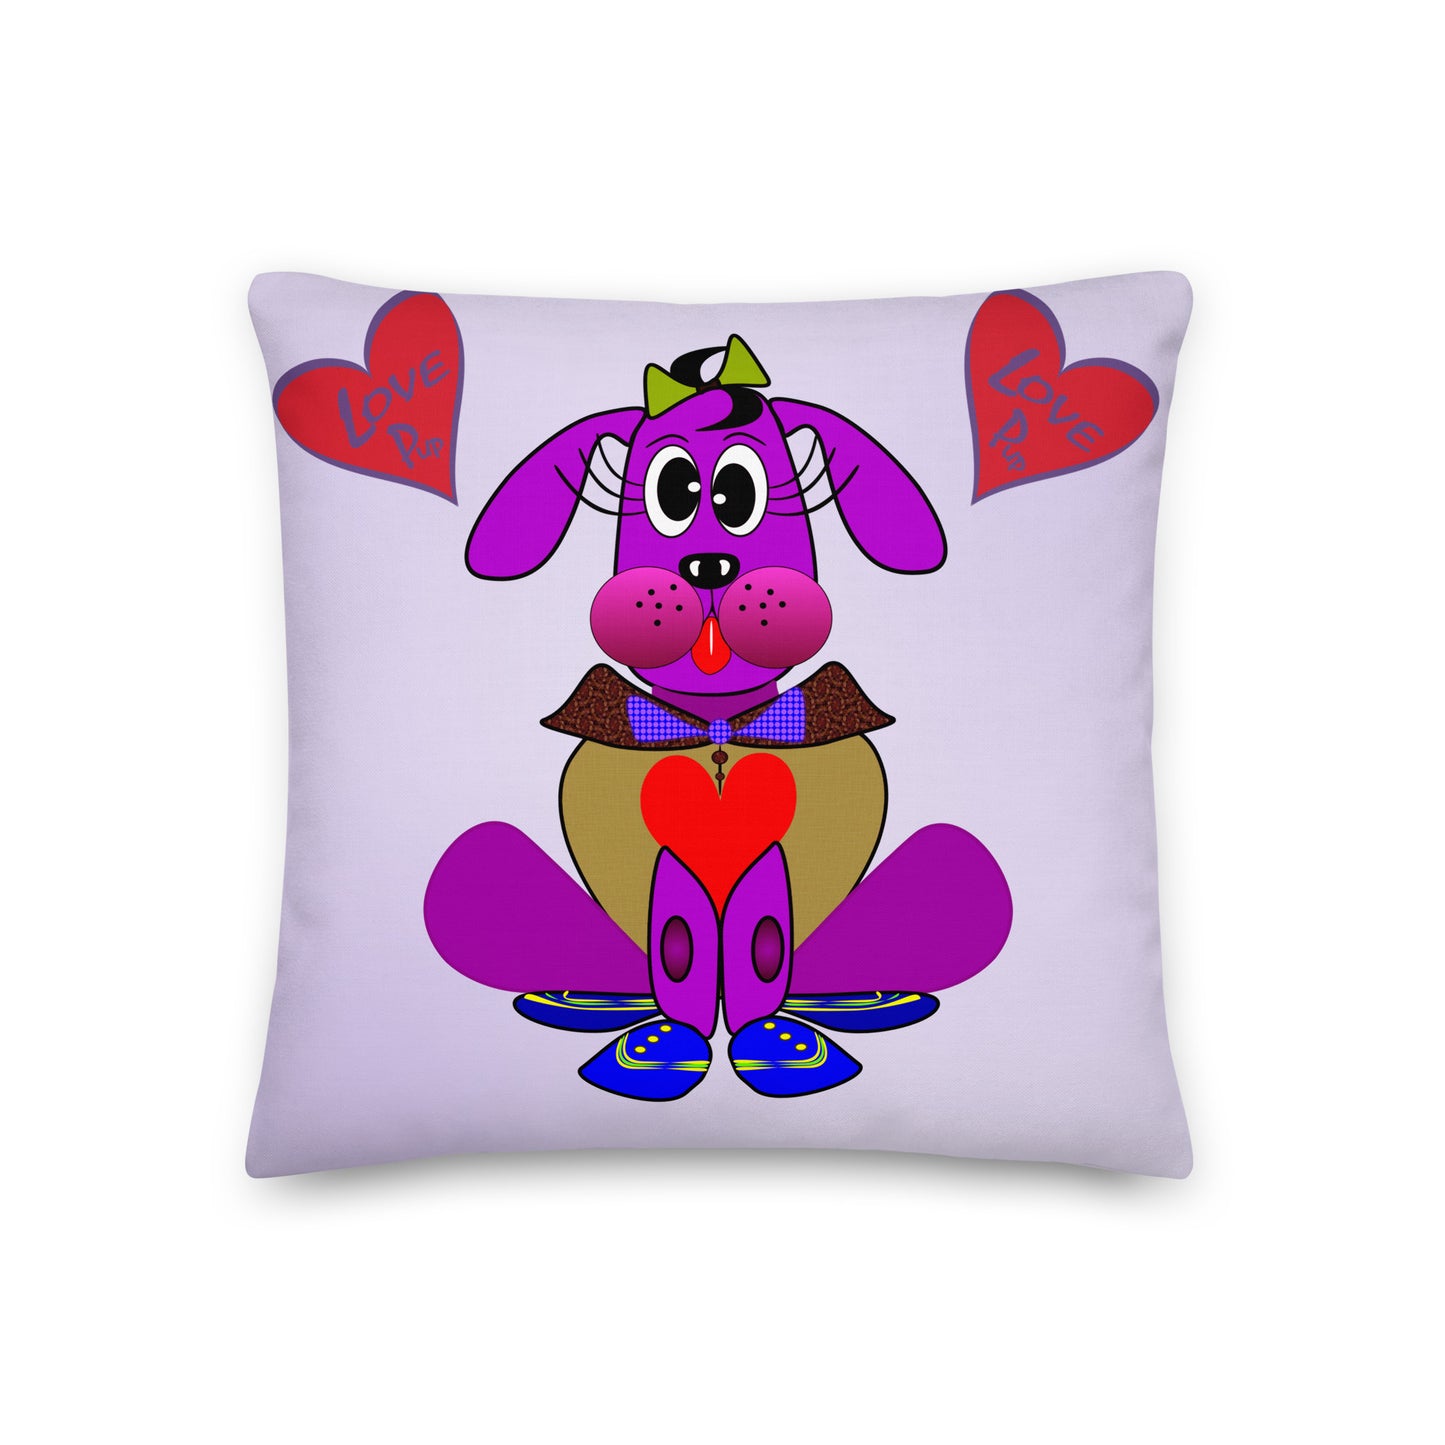 Love Pup 3 Violet BeSculpt Kids Throw Pillow S (Fabric with a linen feel)